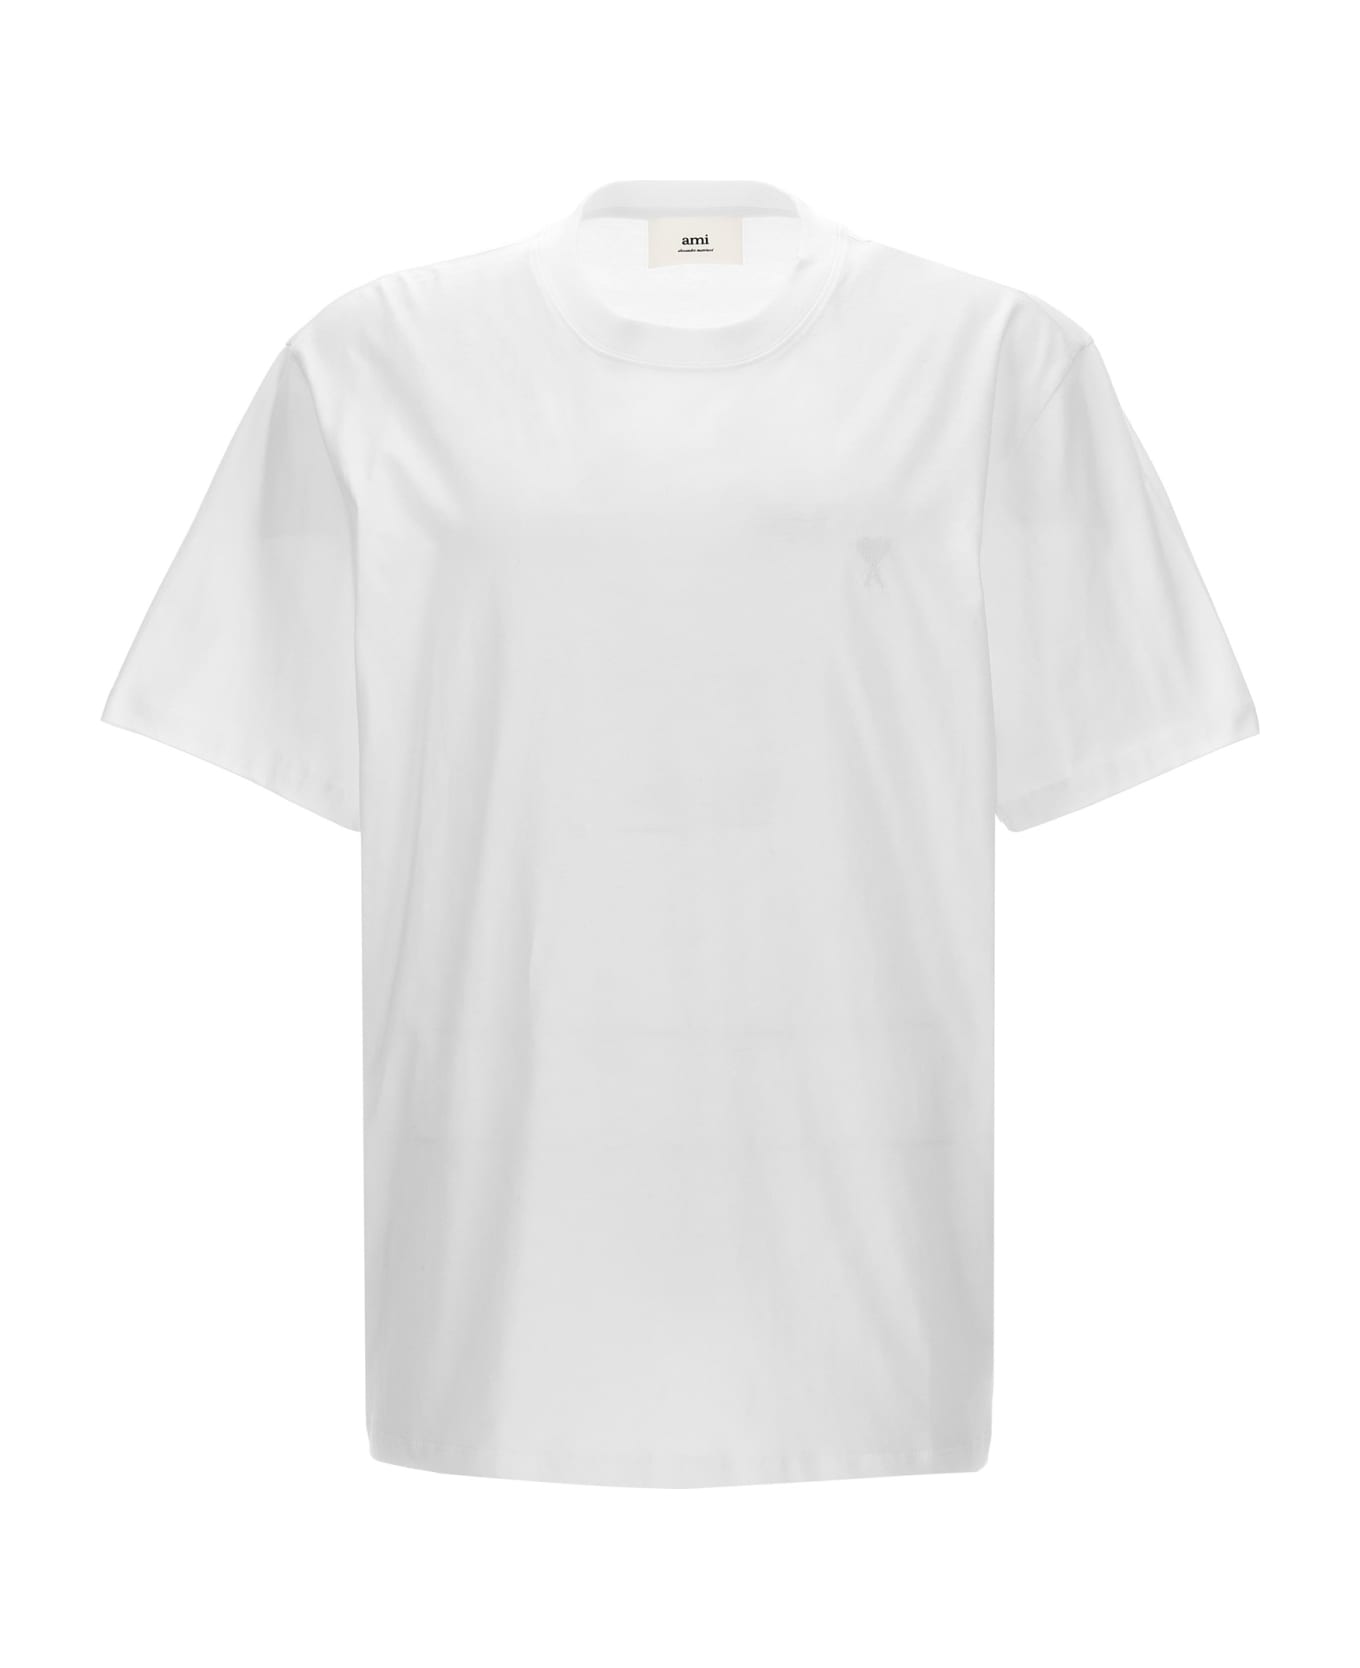 Ami Alexandre Mattiussi 'ami De Coeur' T-shirt - White